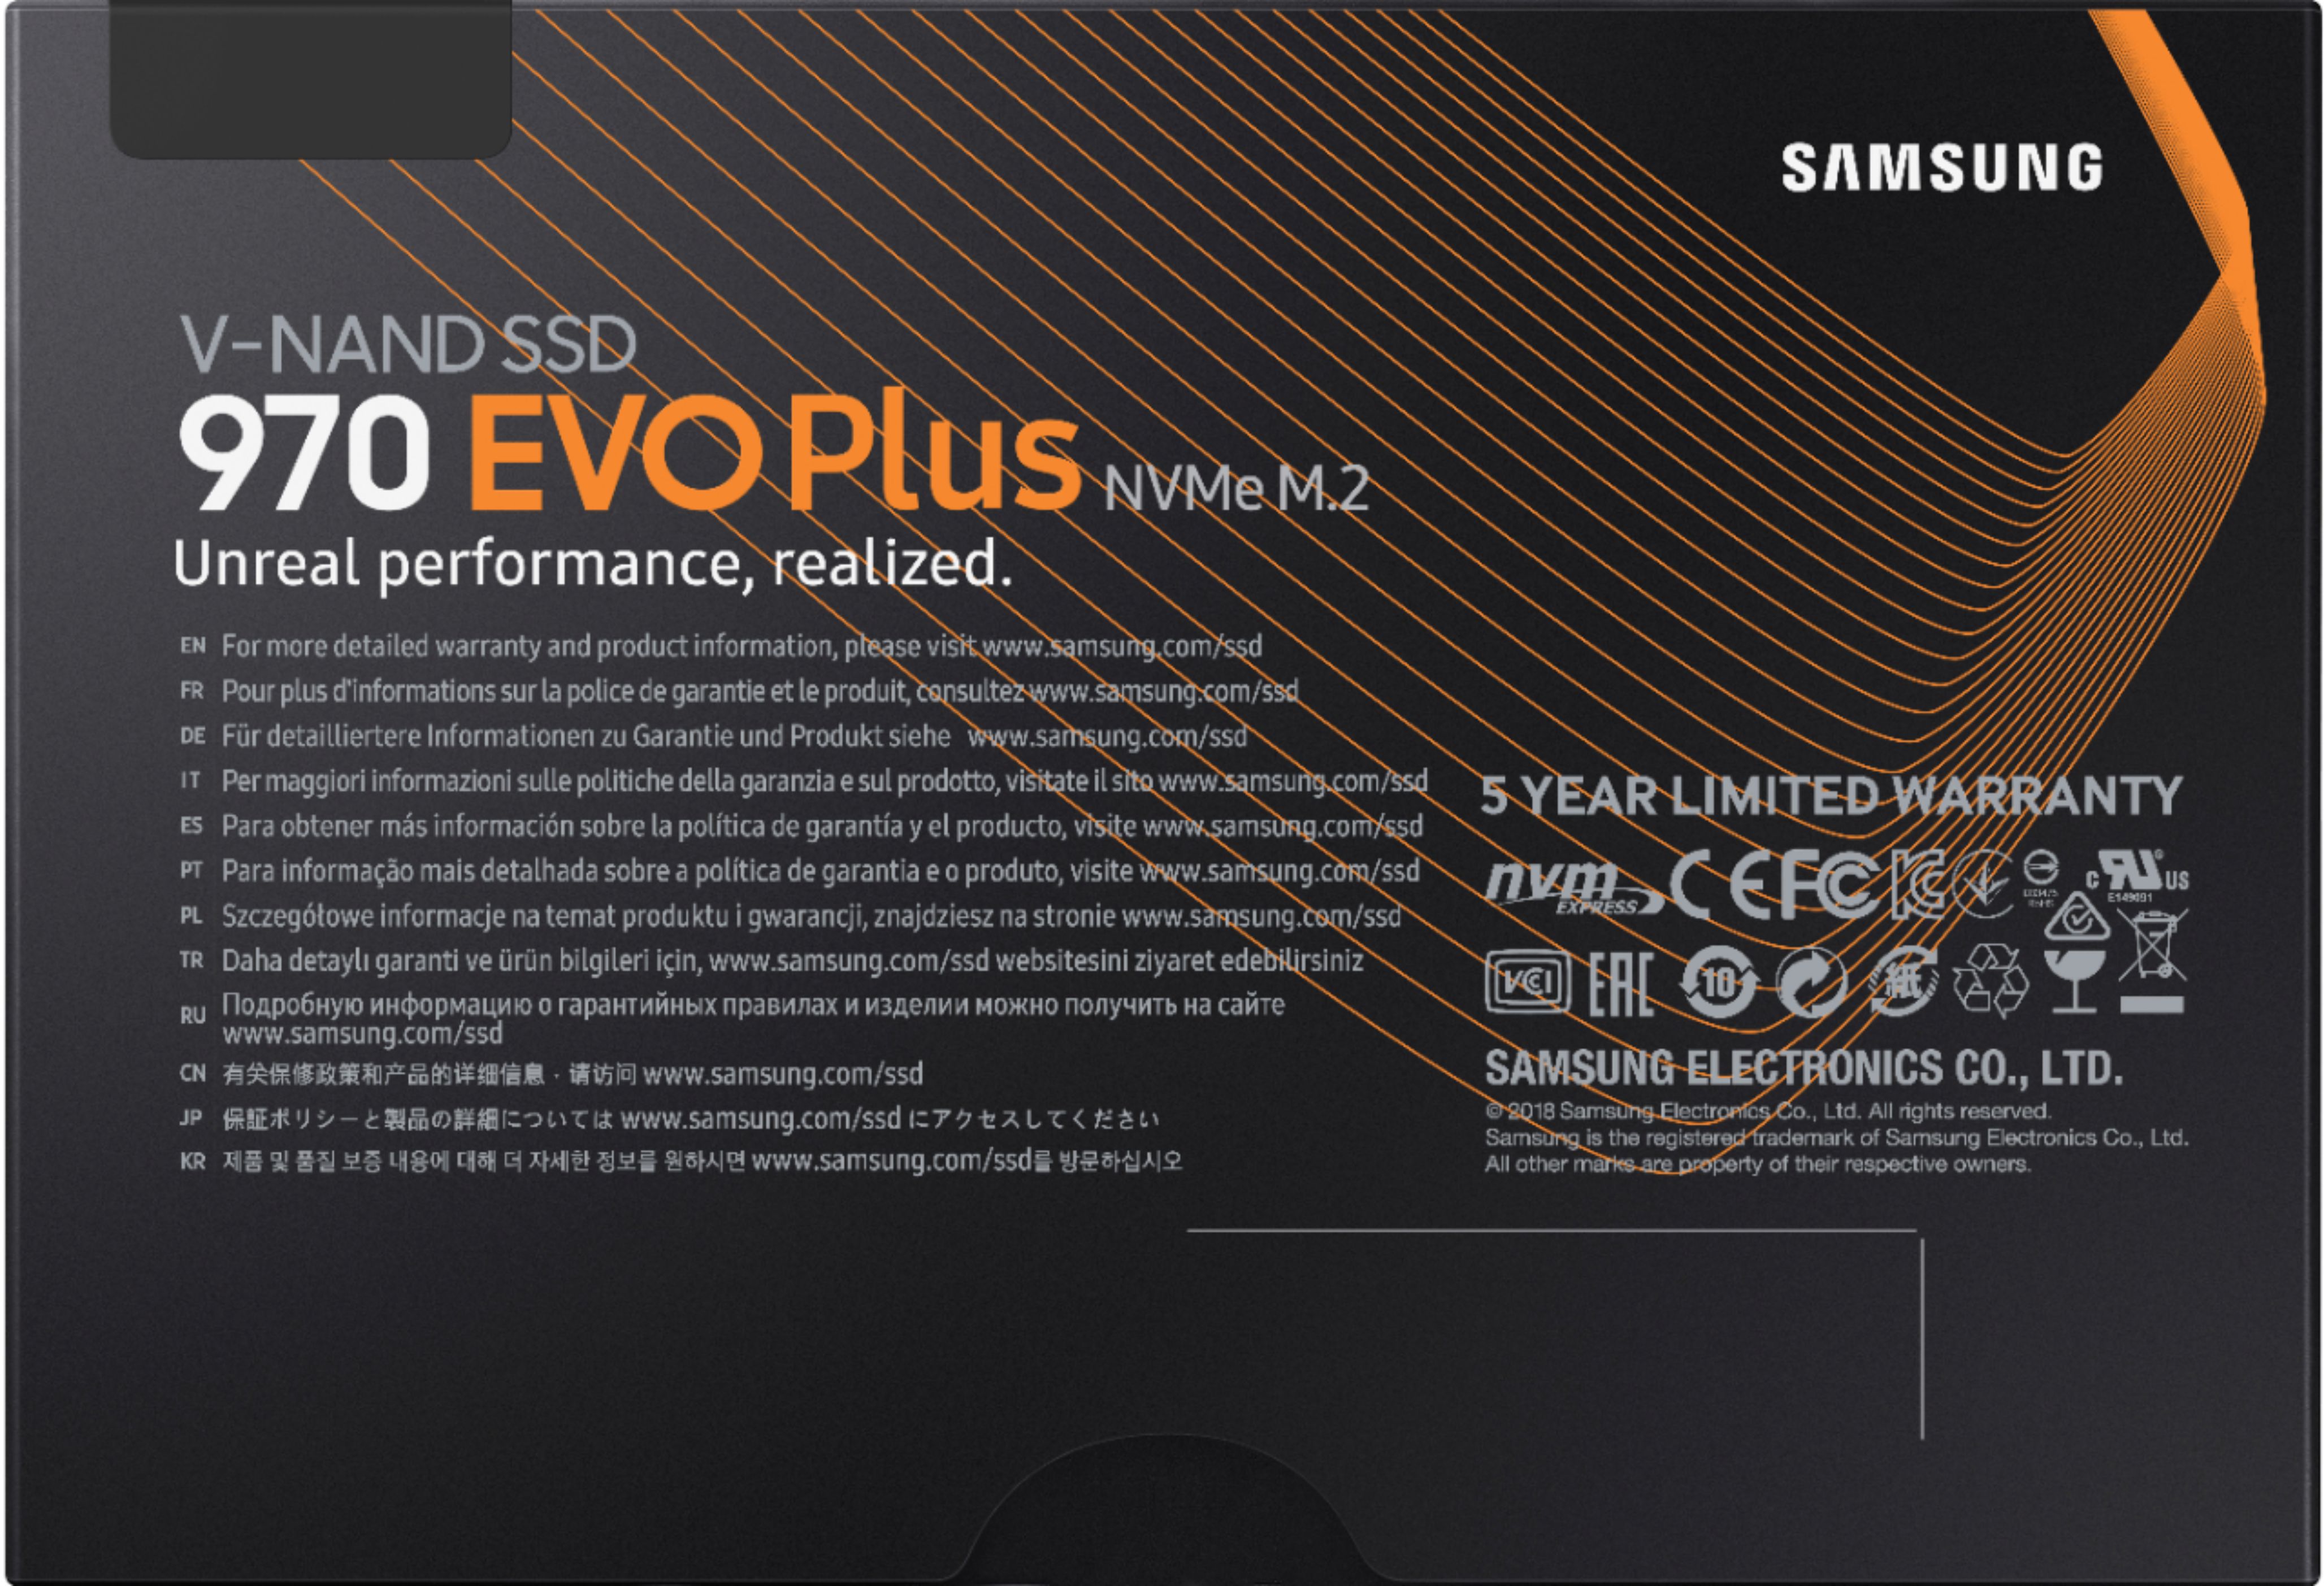 Samsung 970 EVO Plus SSD – Specs and information